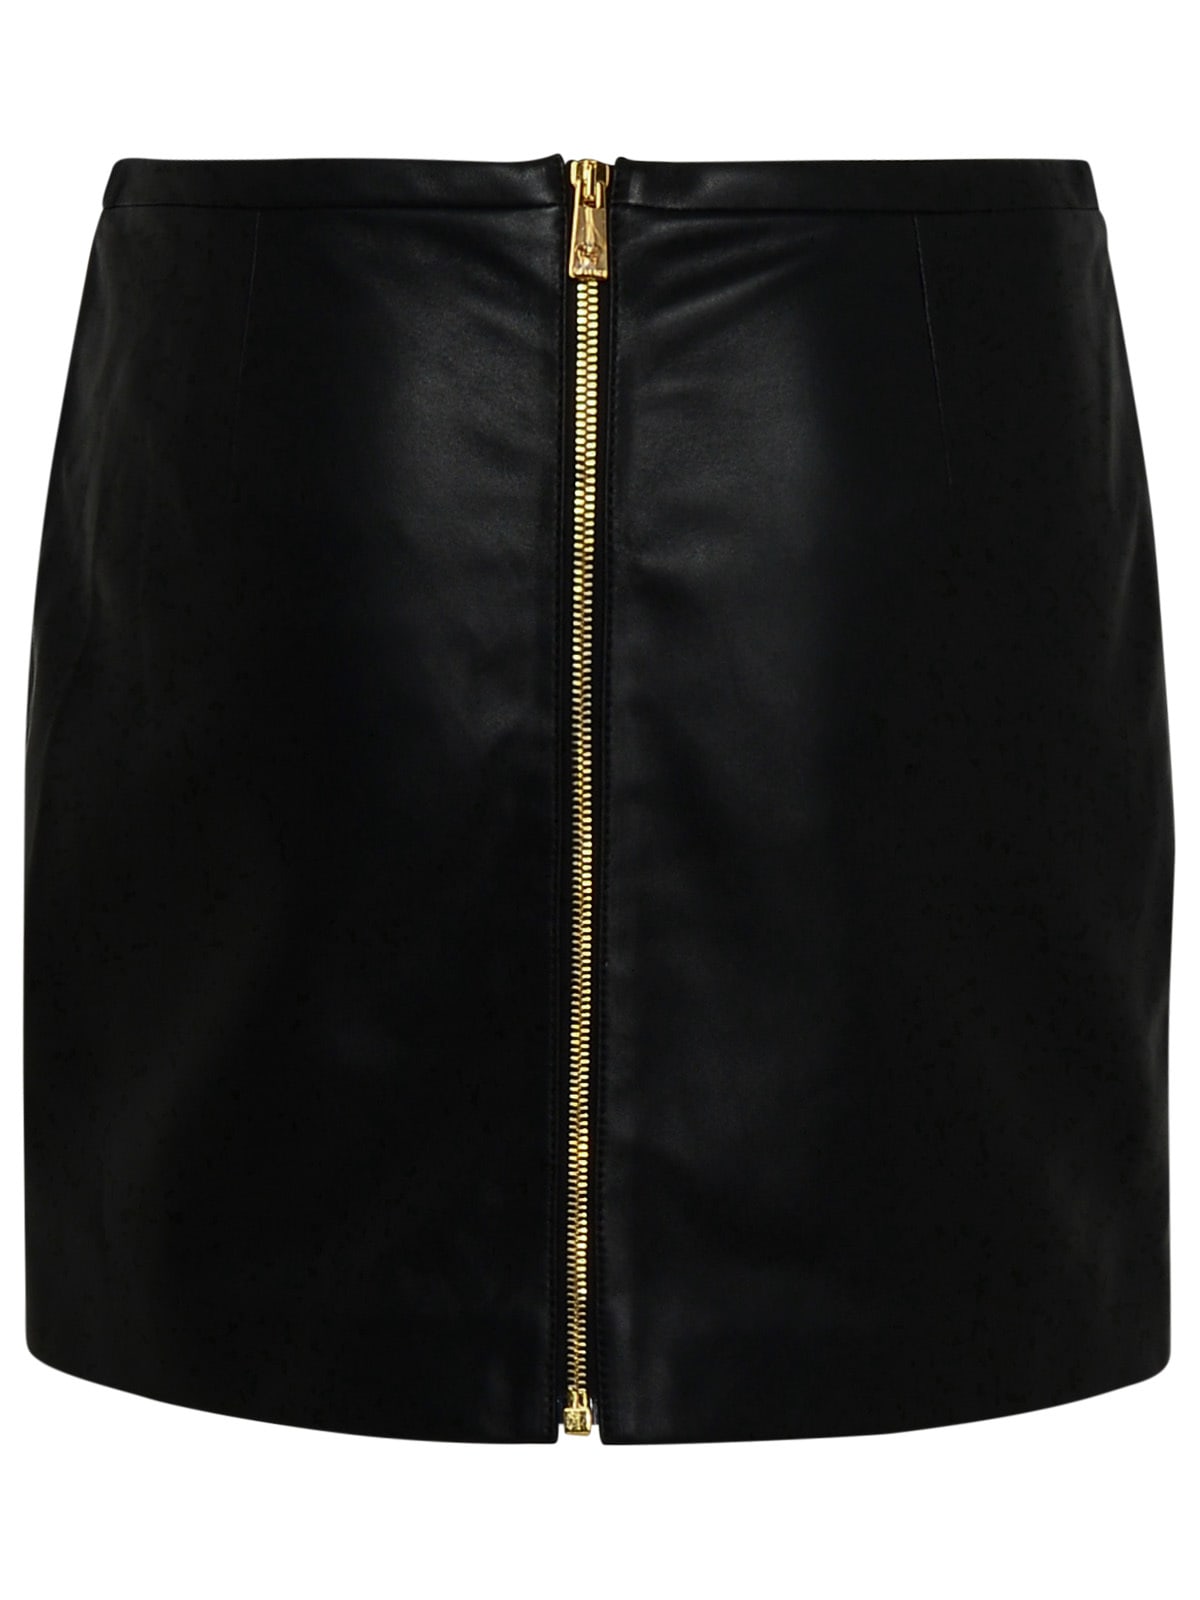 Shop Versace Black Leather Miniskirt